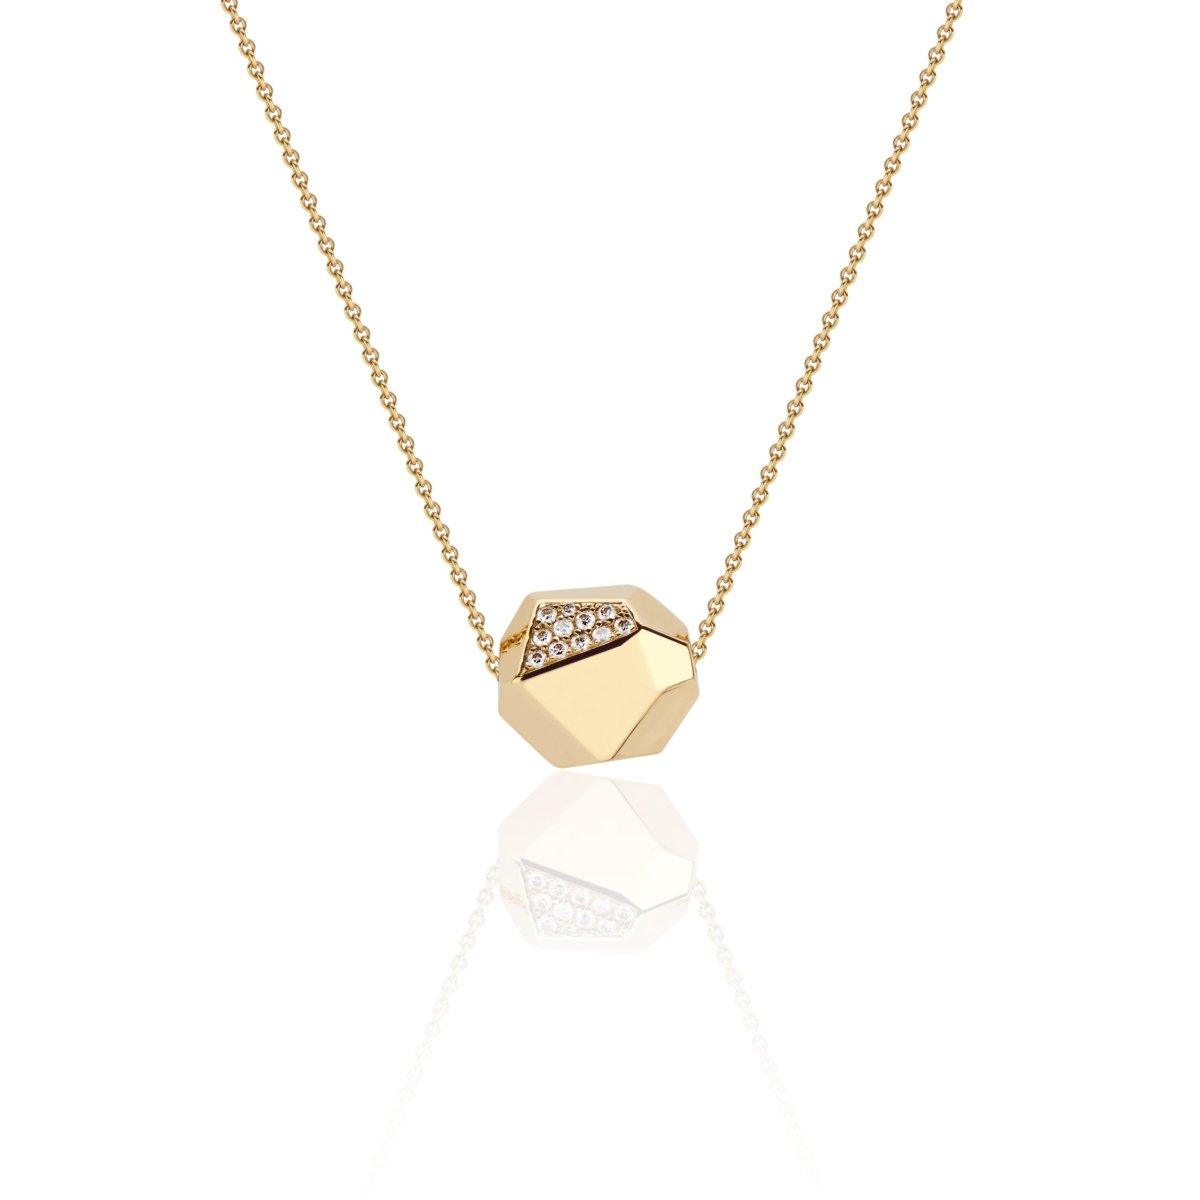 Gold Rock Pendant with Diamonds - Nataly Aponte